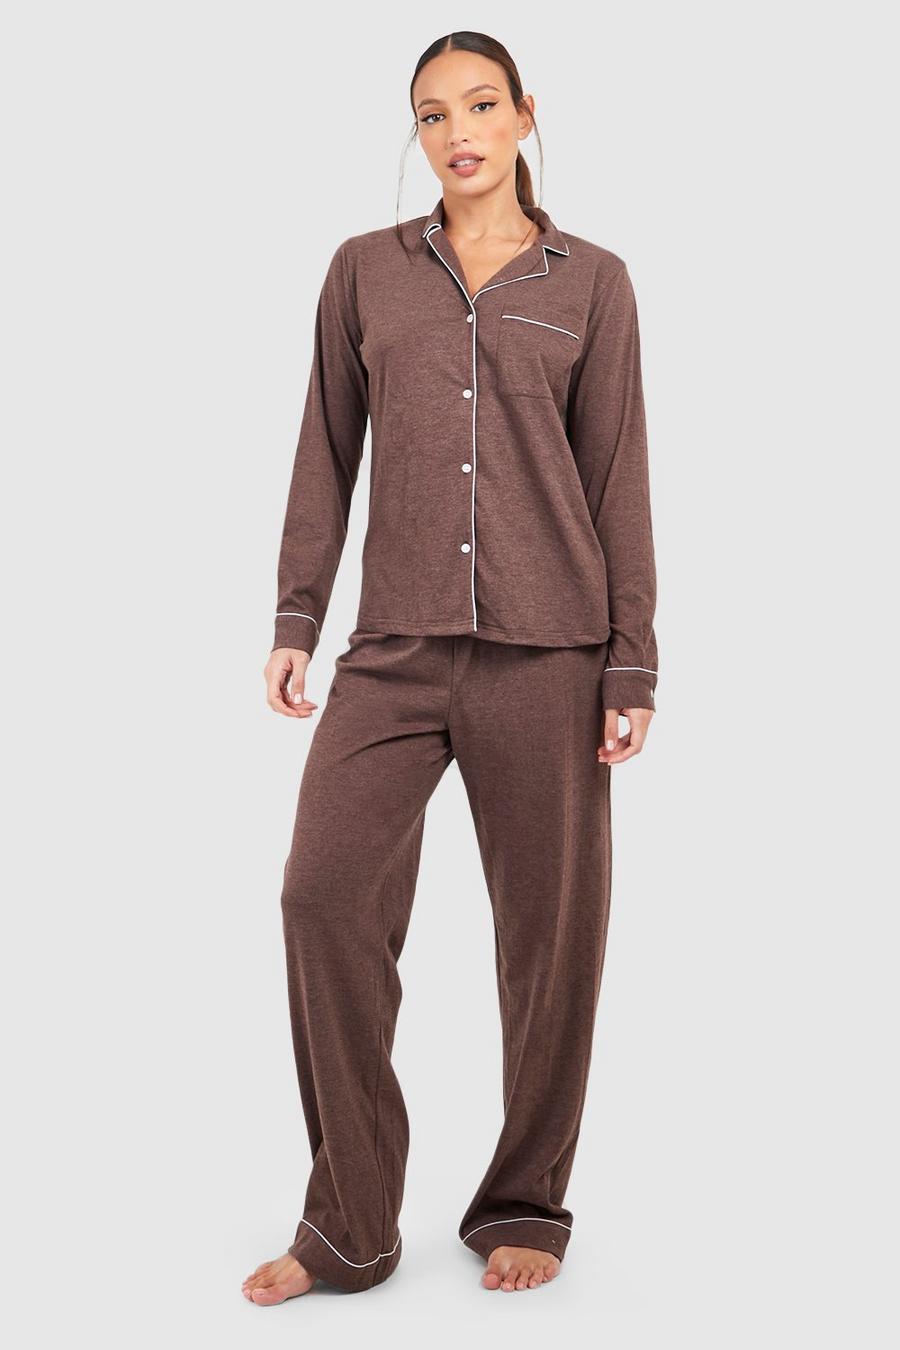 Chocolate Tall Jersey Knit Button Pj Long Sleeve Pants Set